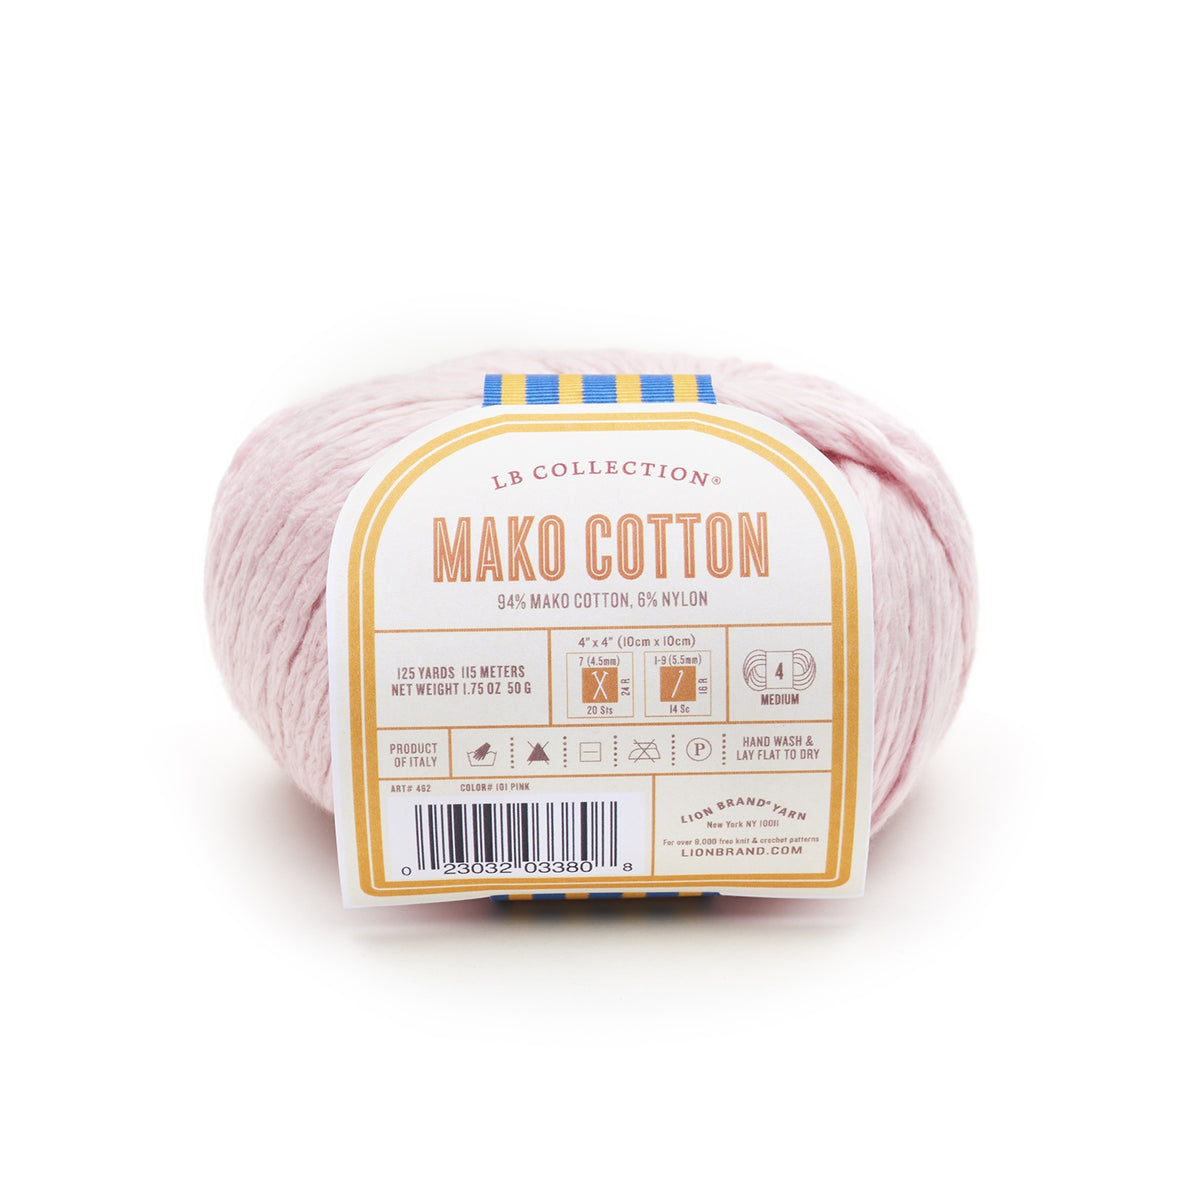 Baby Soft® Light Yarn – Lion Brand Yarn